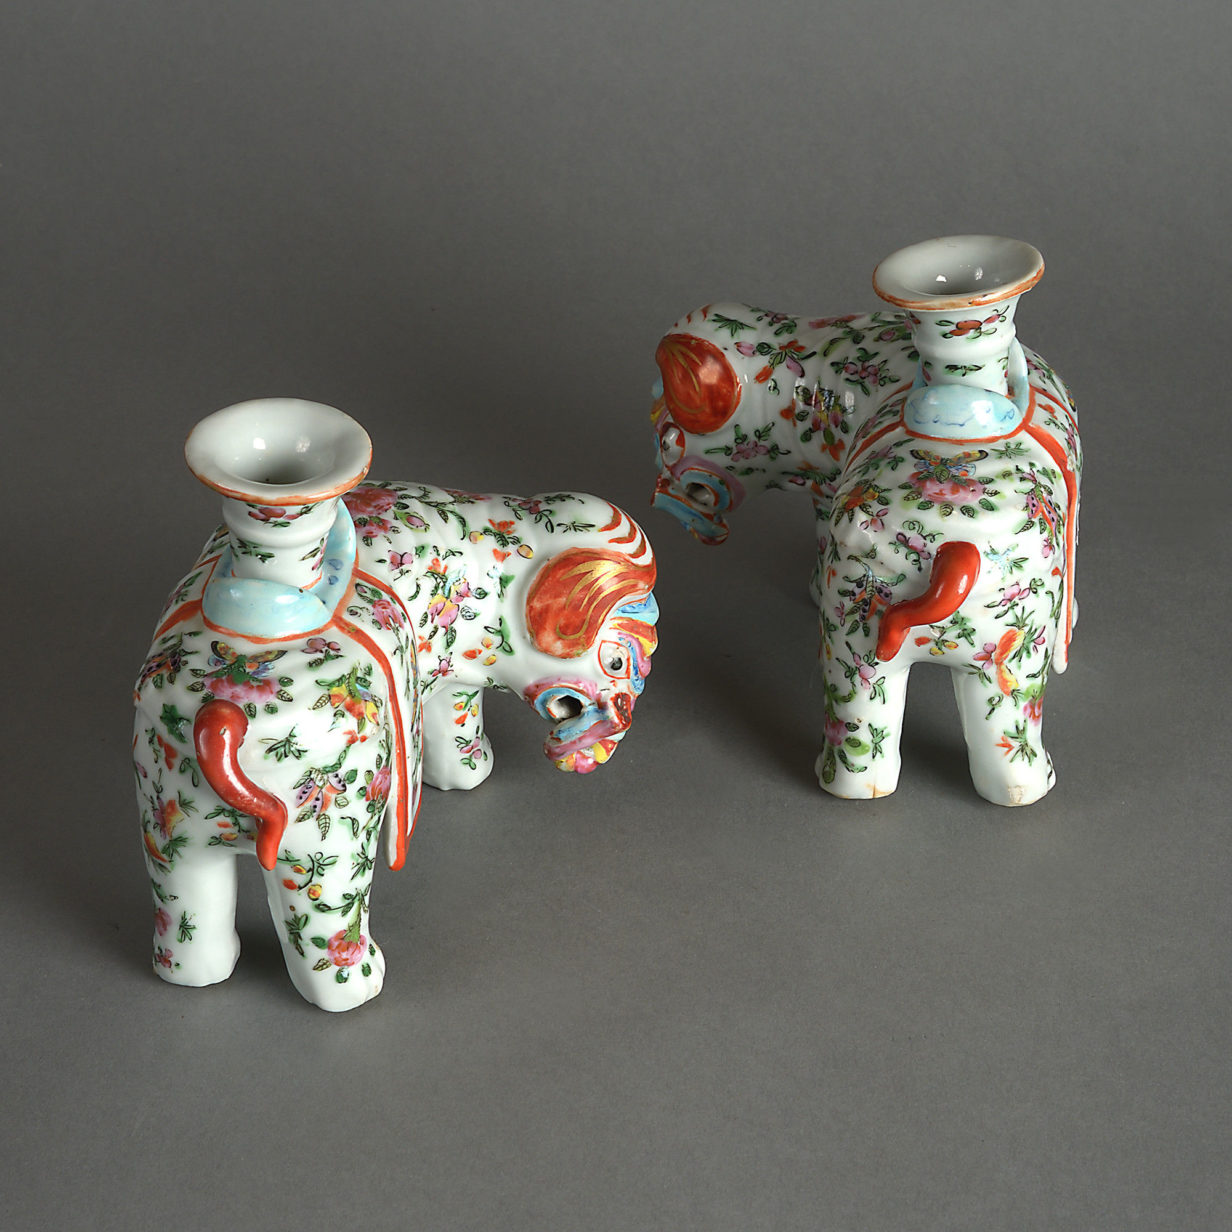 19th century pair of famille rose porcelain elephants